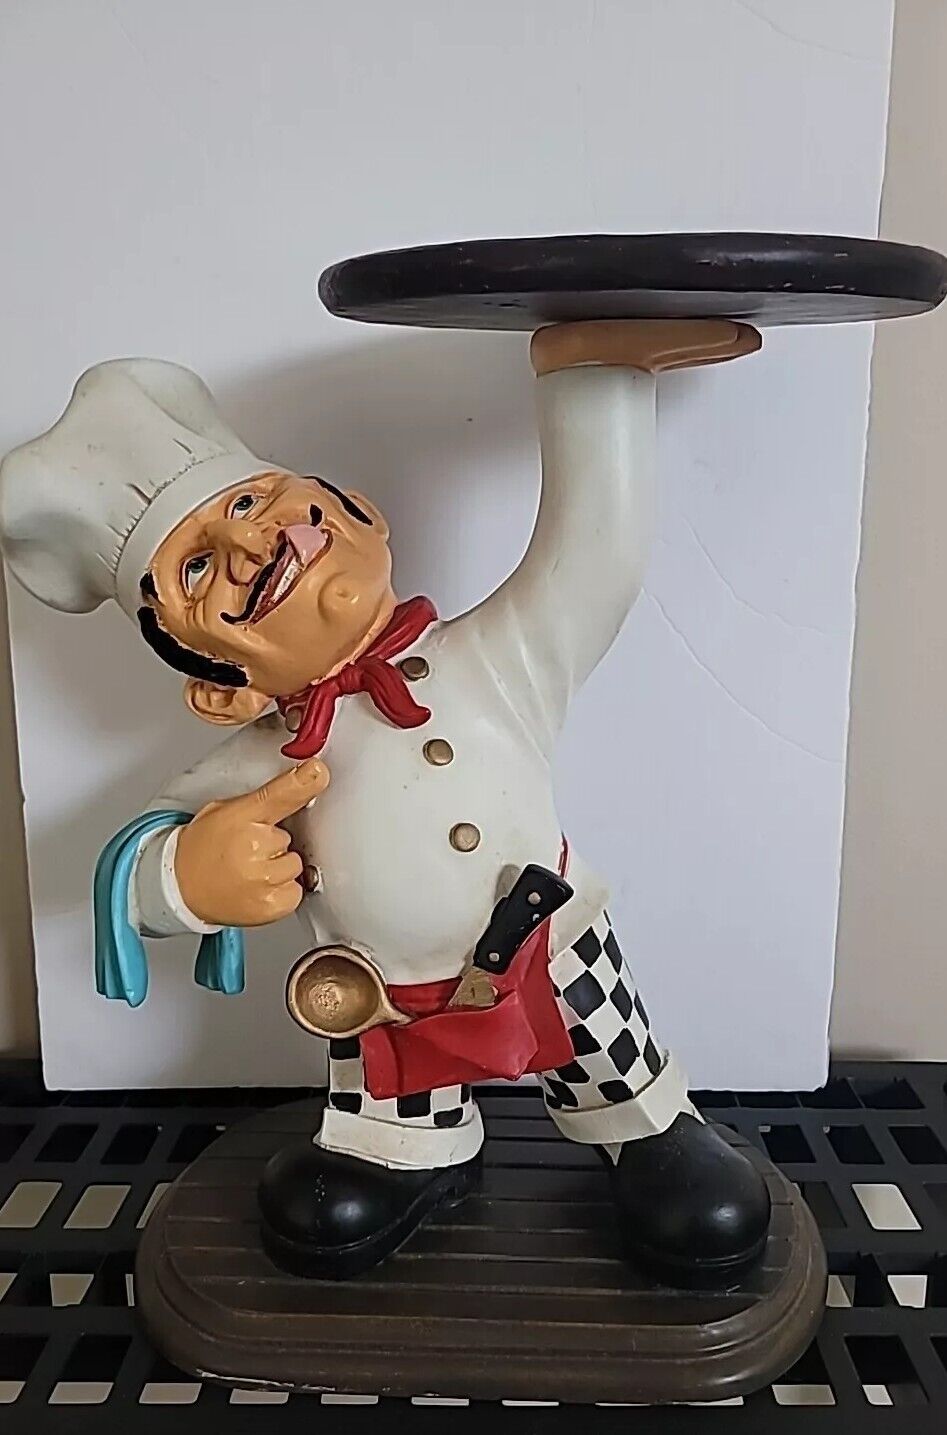 Waiter Chef Restaurant Statue Figurine Holding a Tray RARE